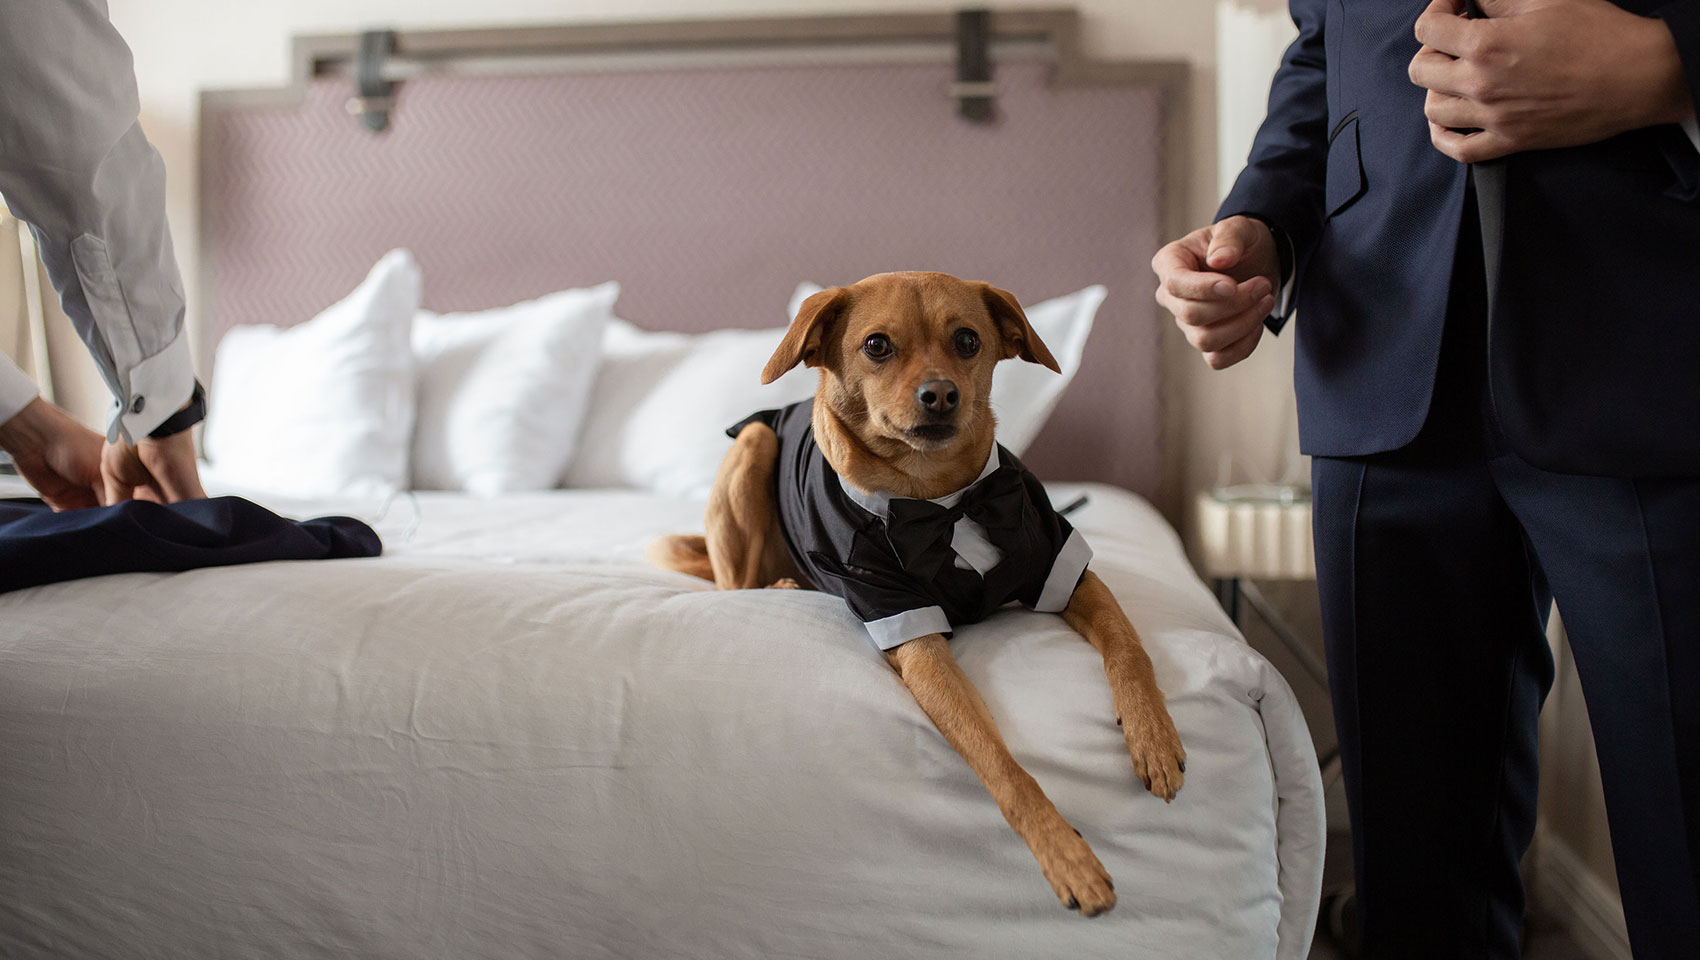 Dog in wedding attire on bed